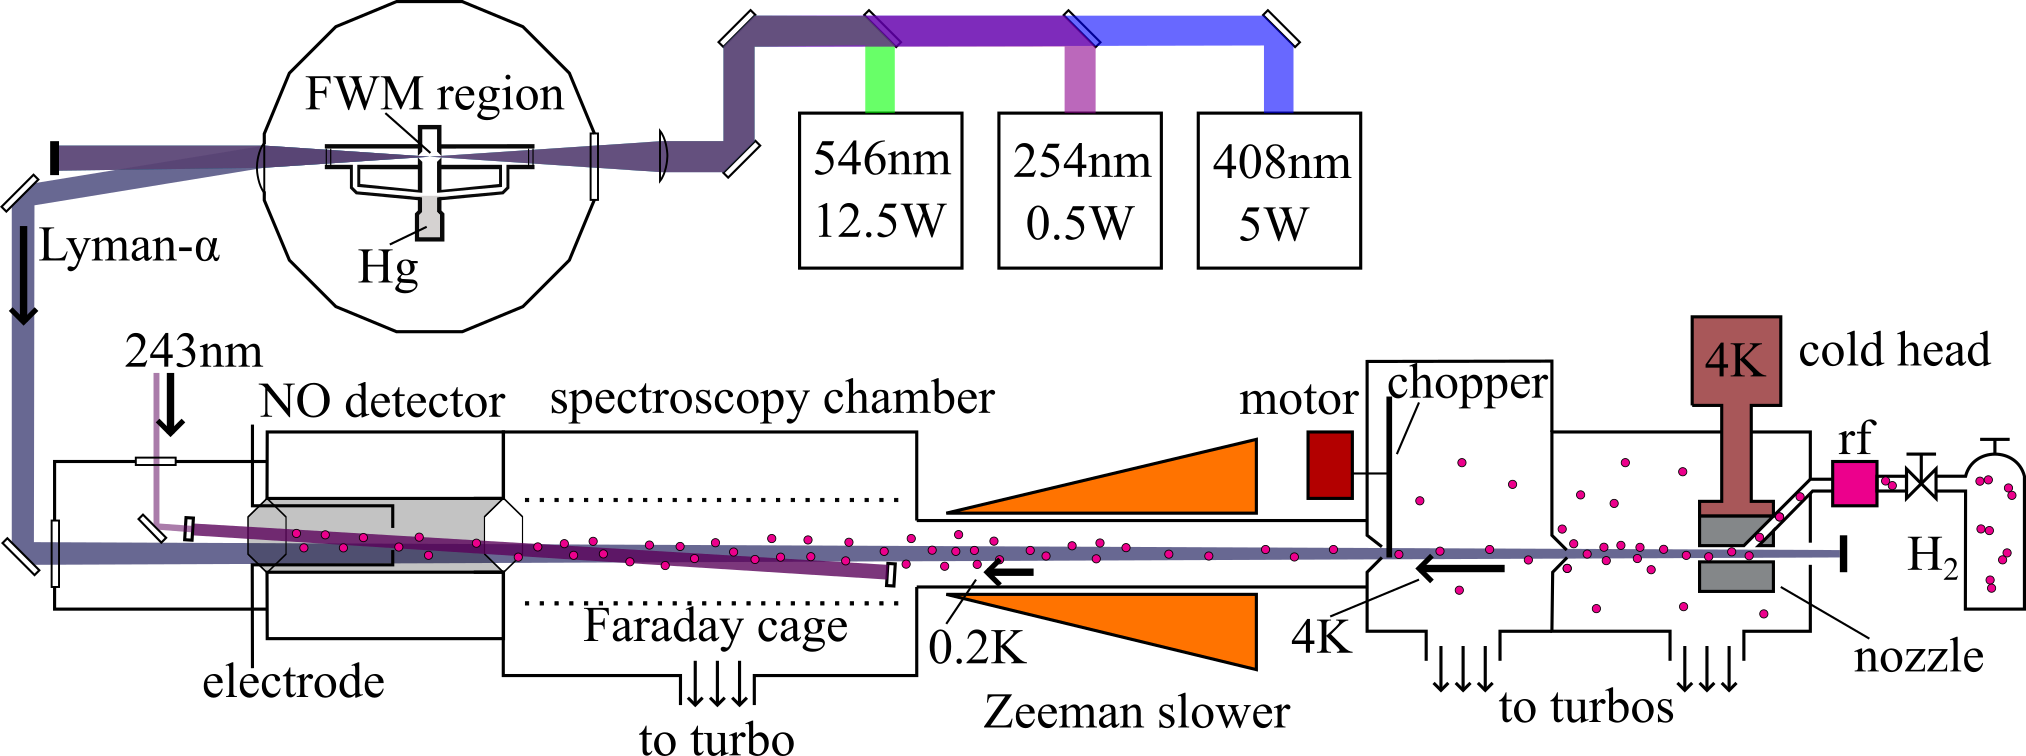 H beam schematic and Hg Laser